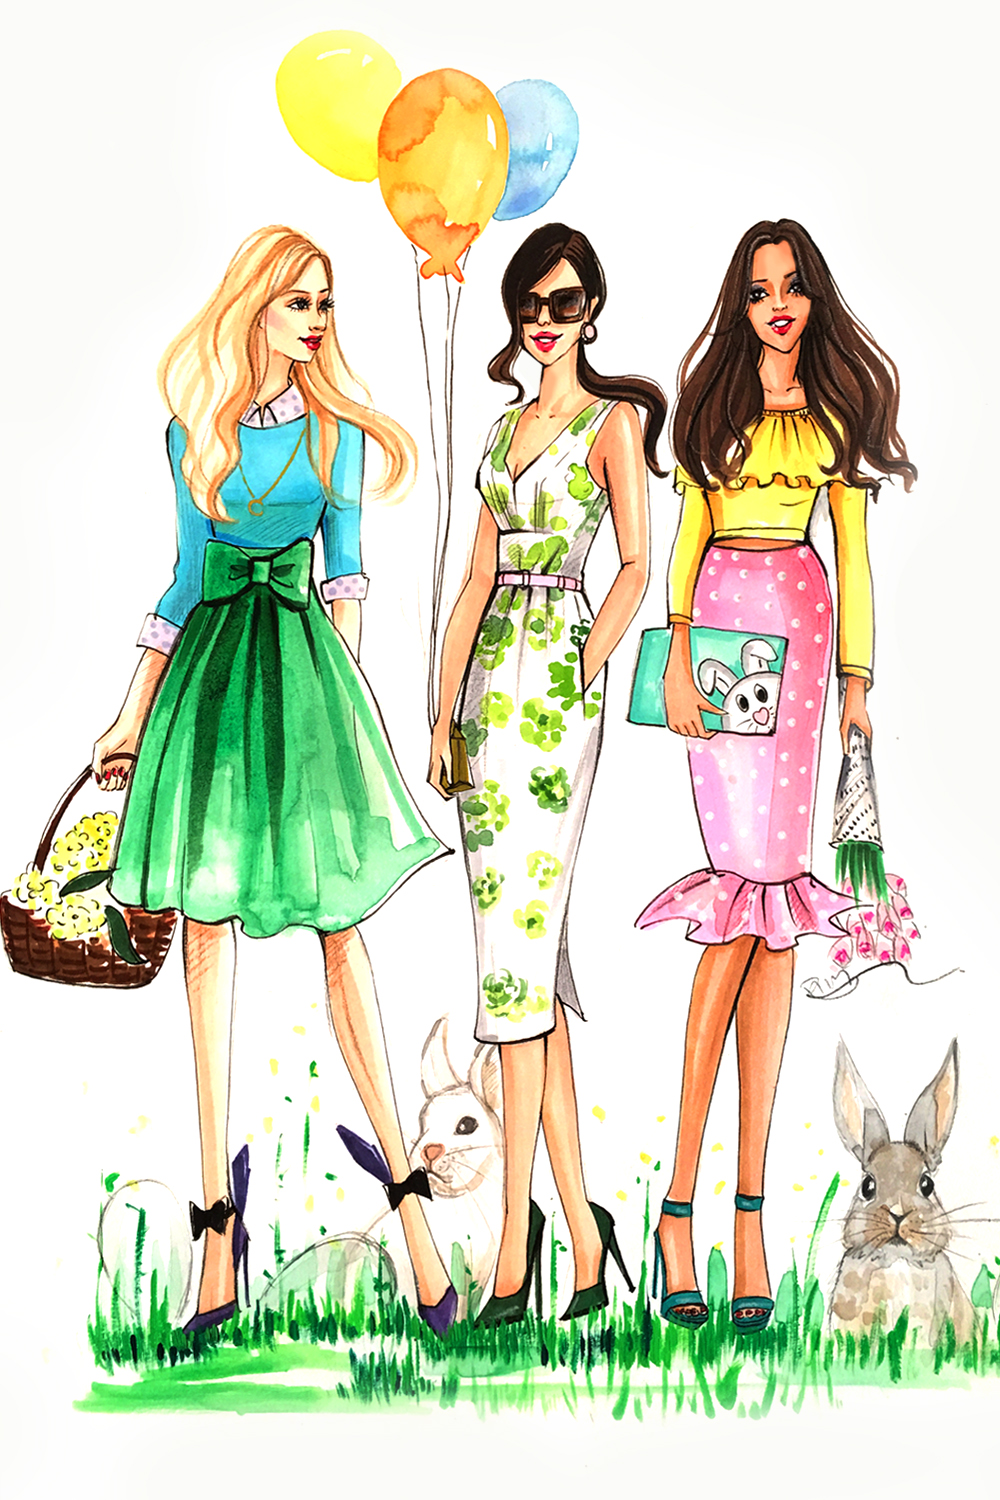 macy's — Blog — Fashion and Beauty Illustrator Rongrong DeVoe